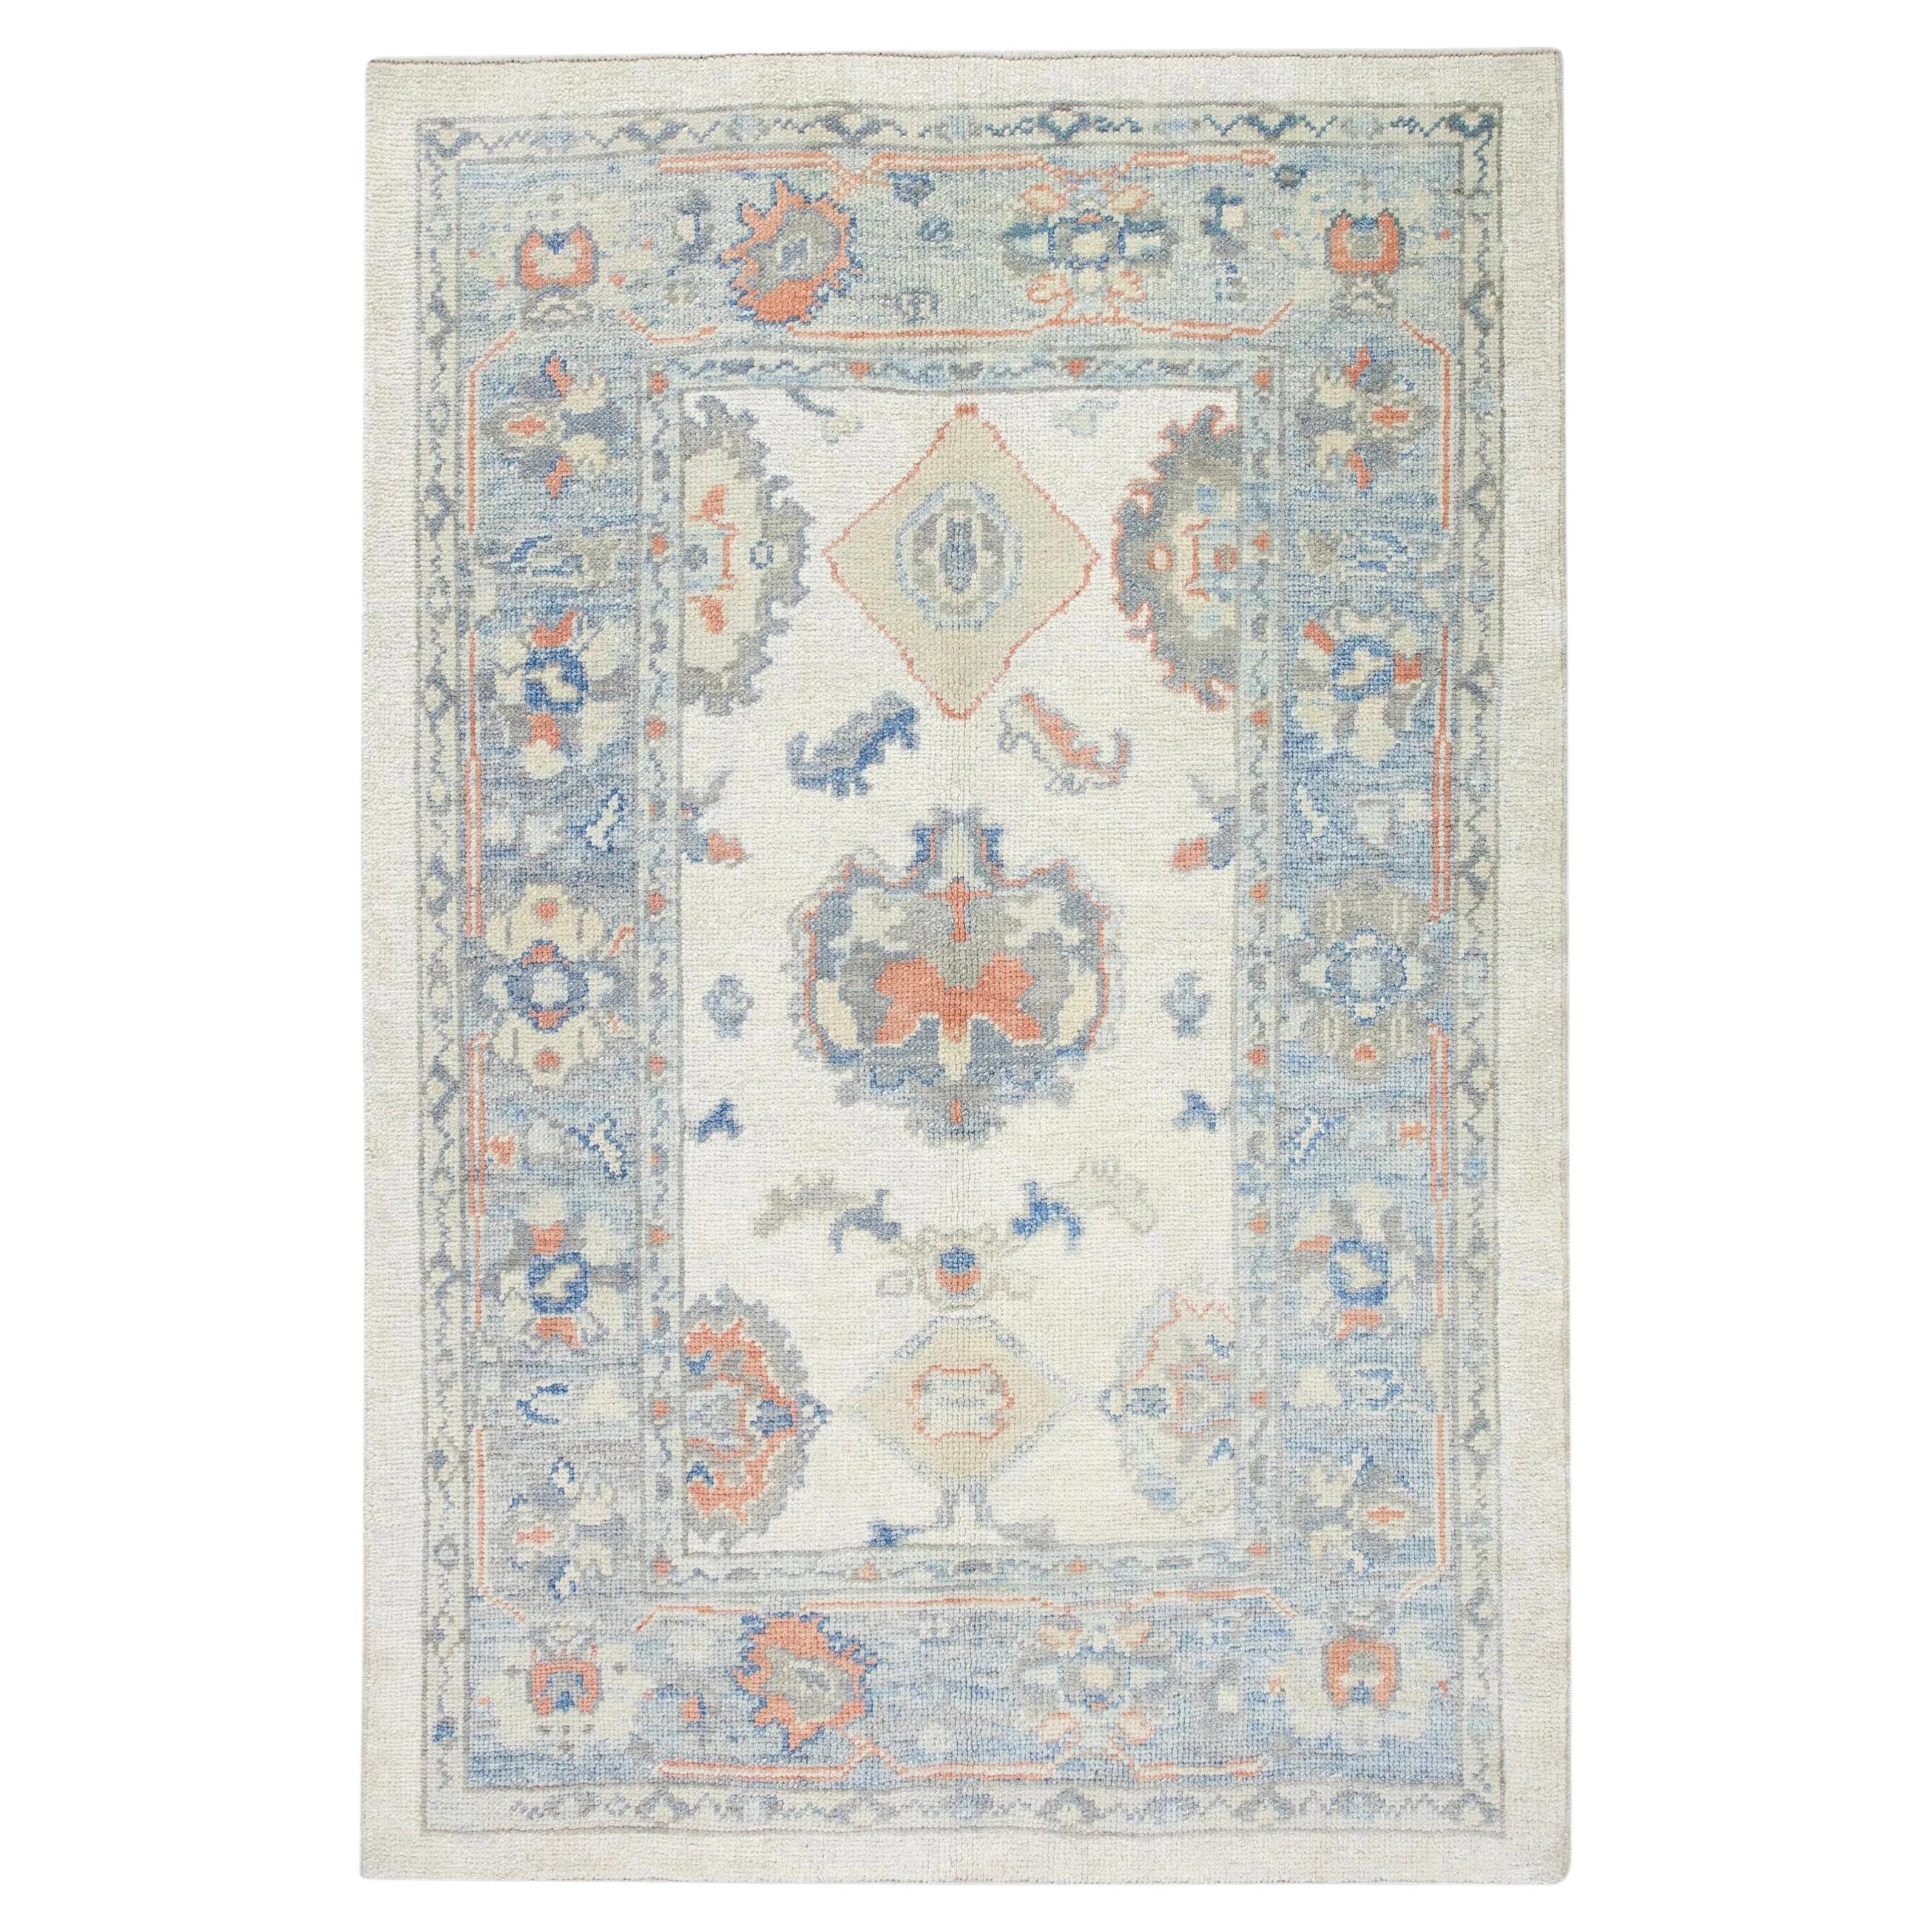 Pastel Blue Floral Design Handwoven Wool Turkish Oushak Rug 4'2" x 5'7" For Sale